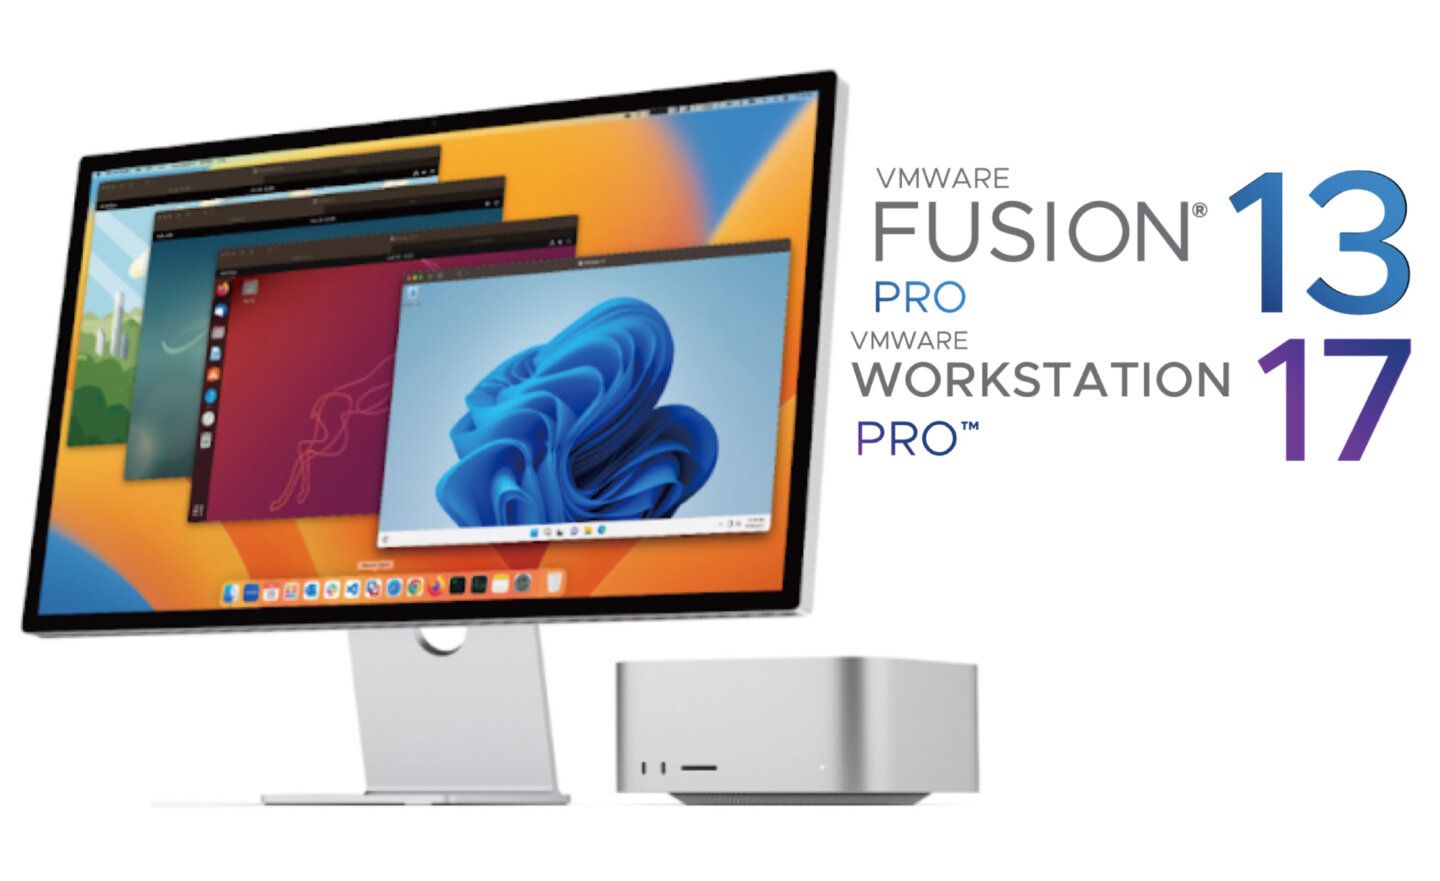 【免費】「VMware Fusion Pro 13」和「VMware Workstation Pro 17」  開放個人使用，教你如何免費下載！